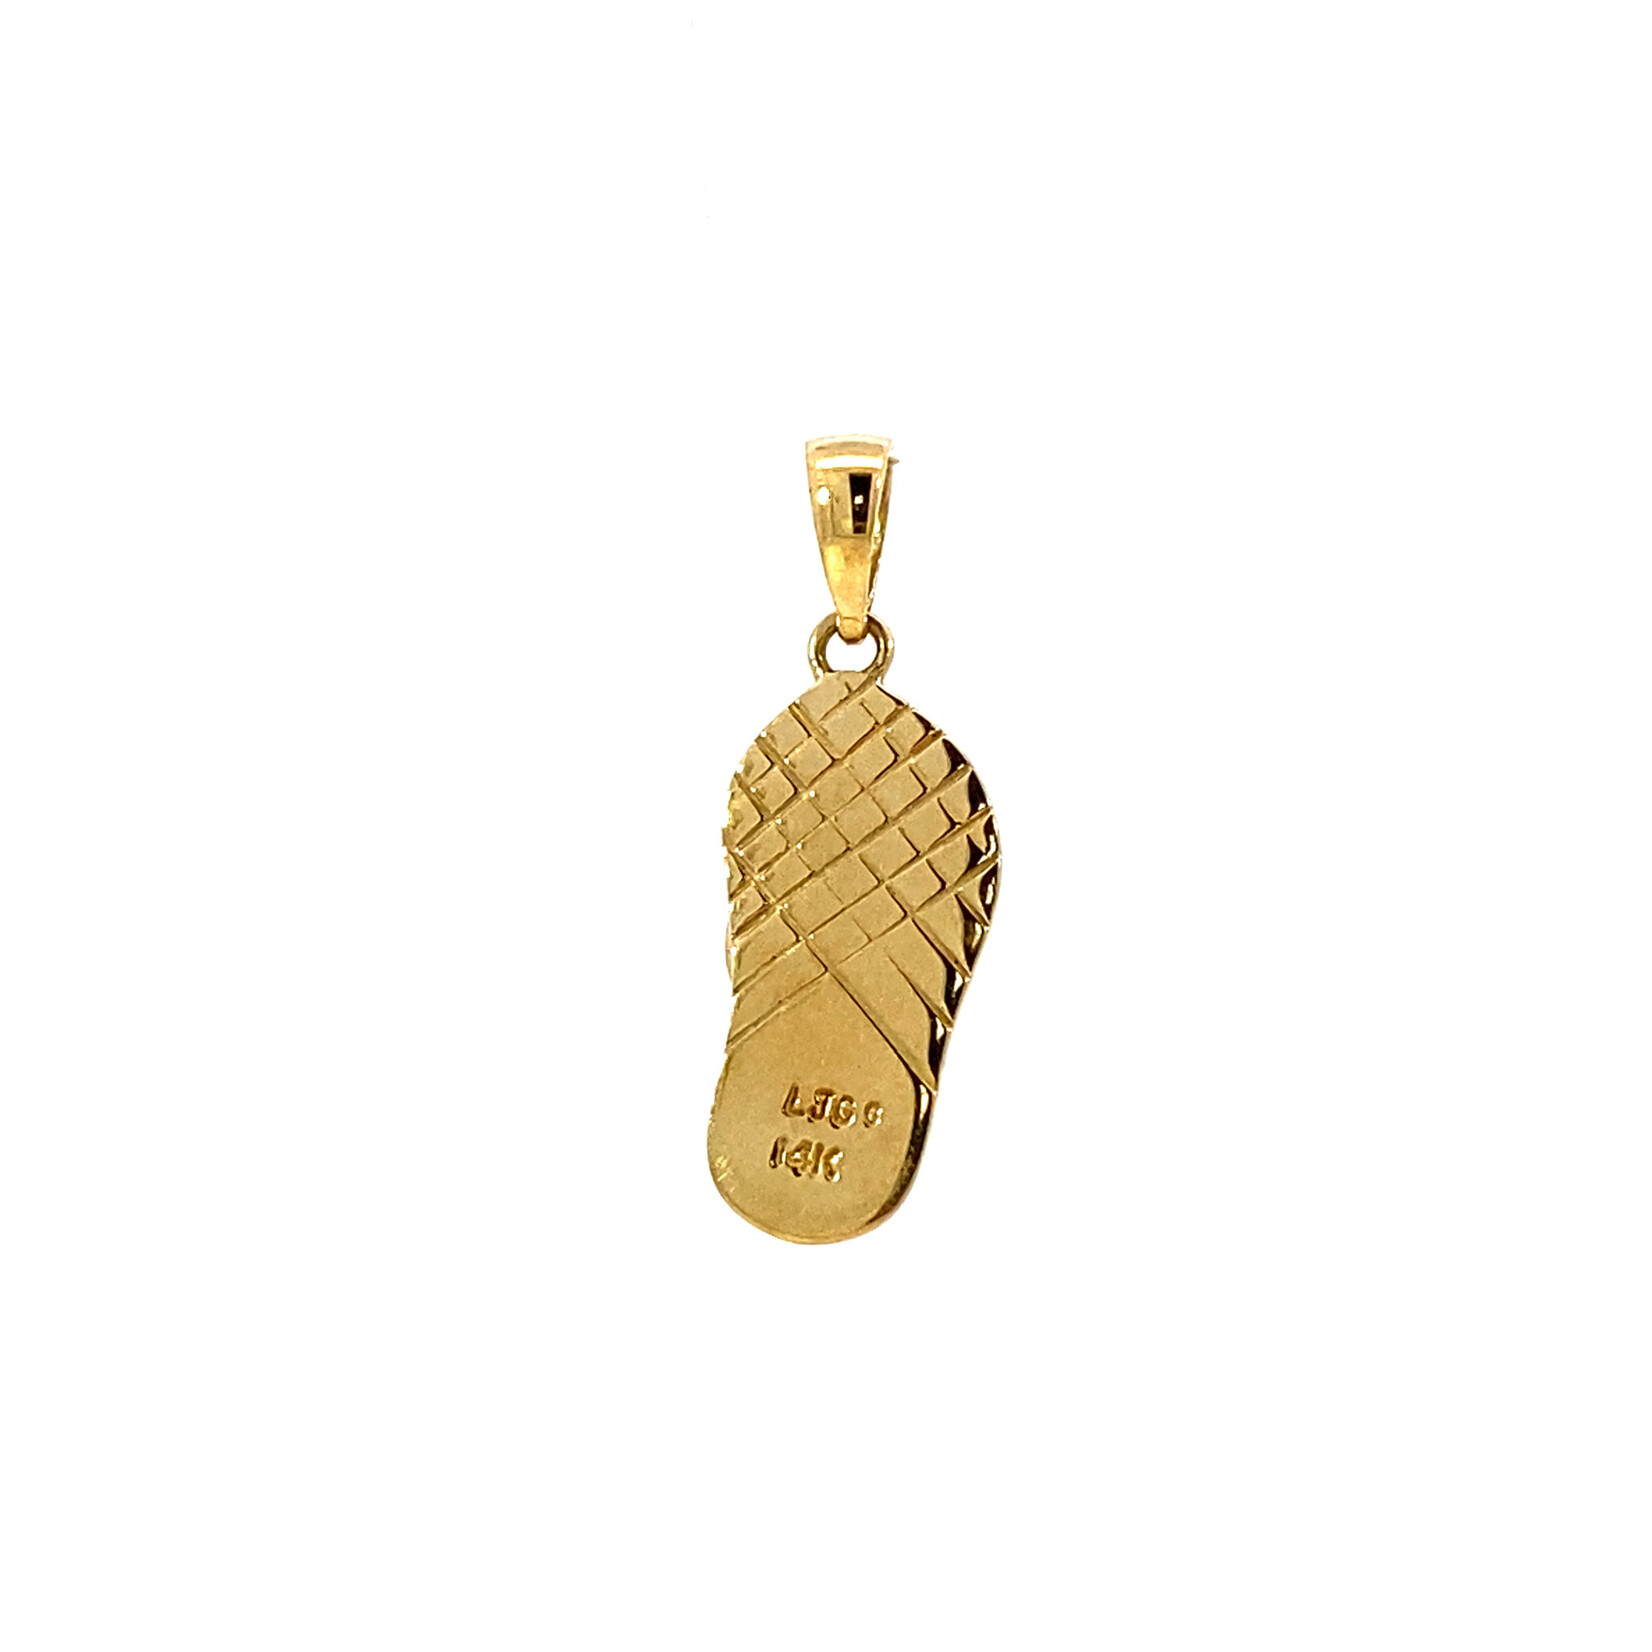 14K Yellow Gold Flip Flop w/ white stones pendant